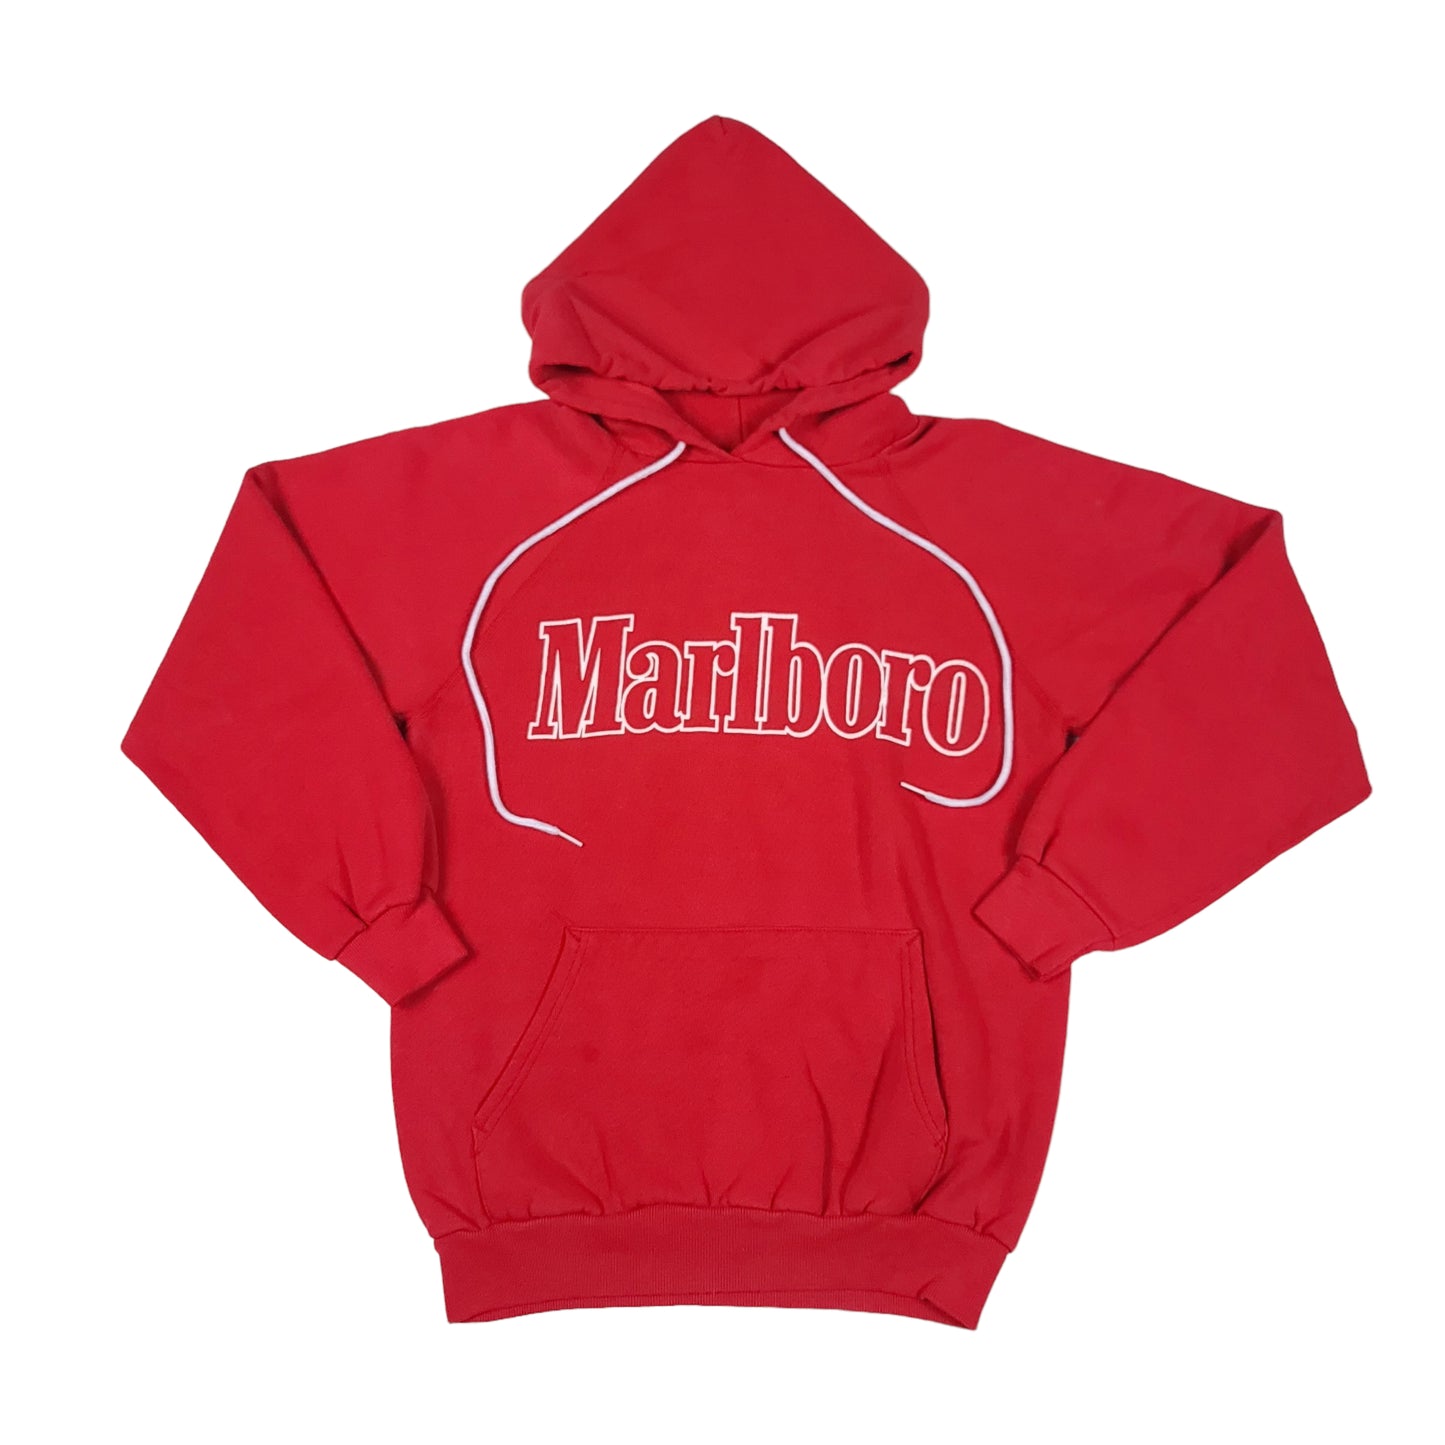 Vintage Marlboro Cigarettes Red Hoodie